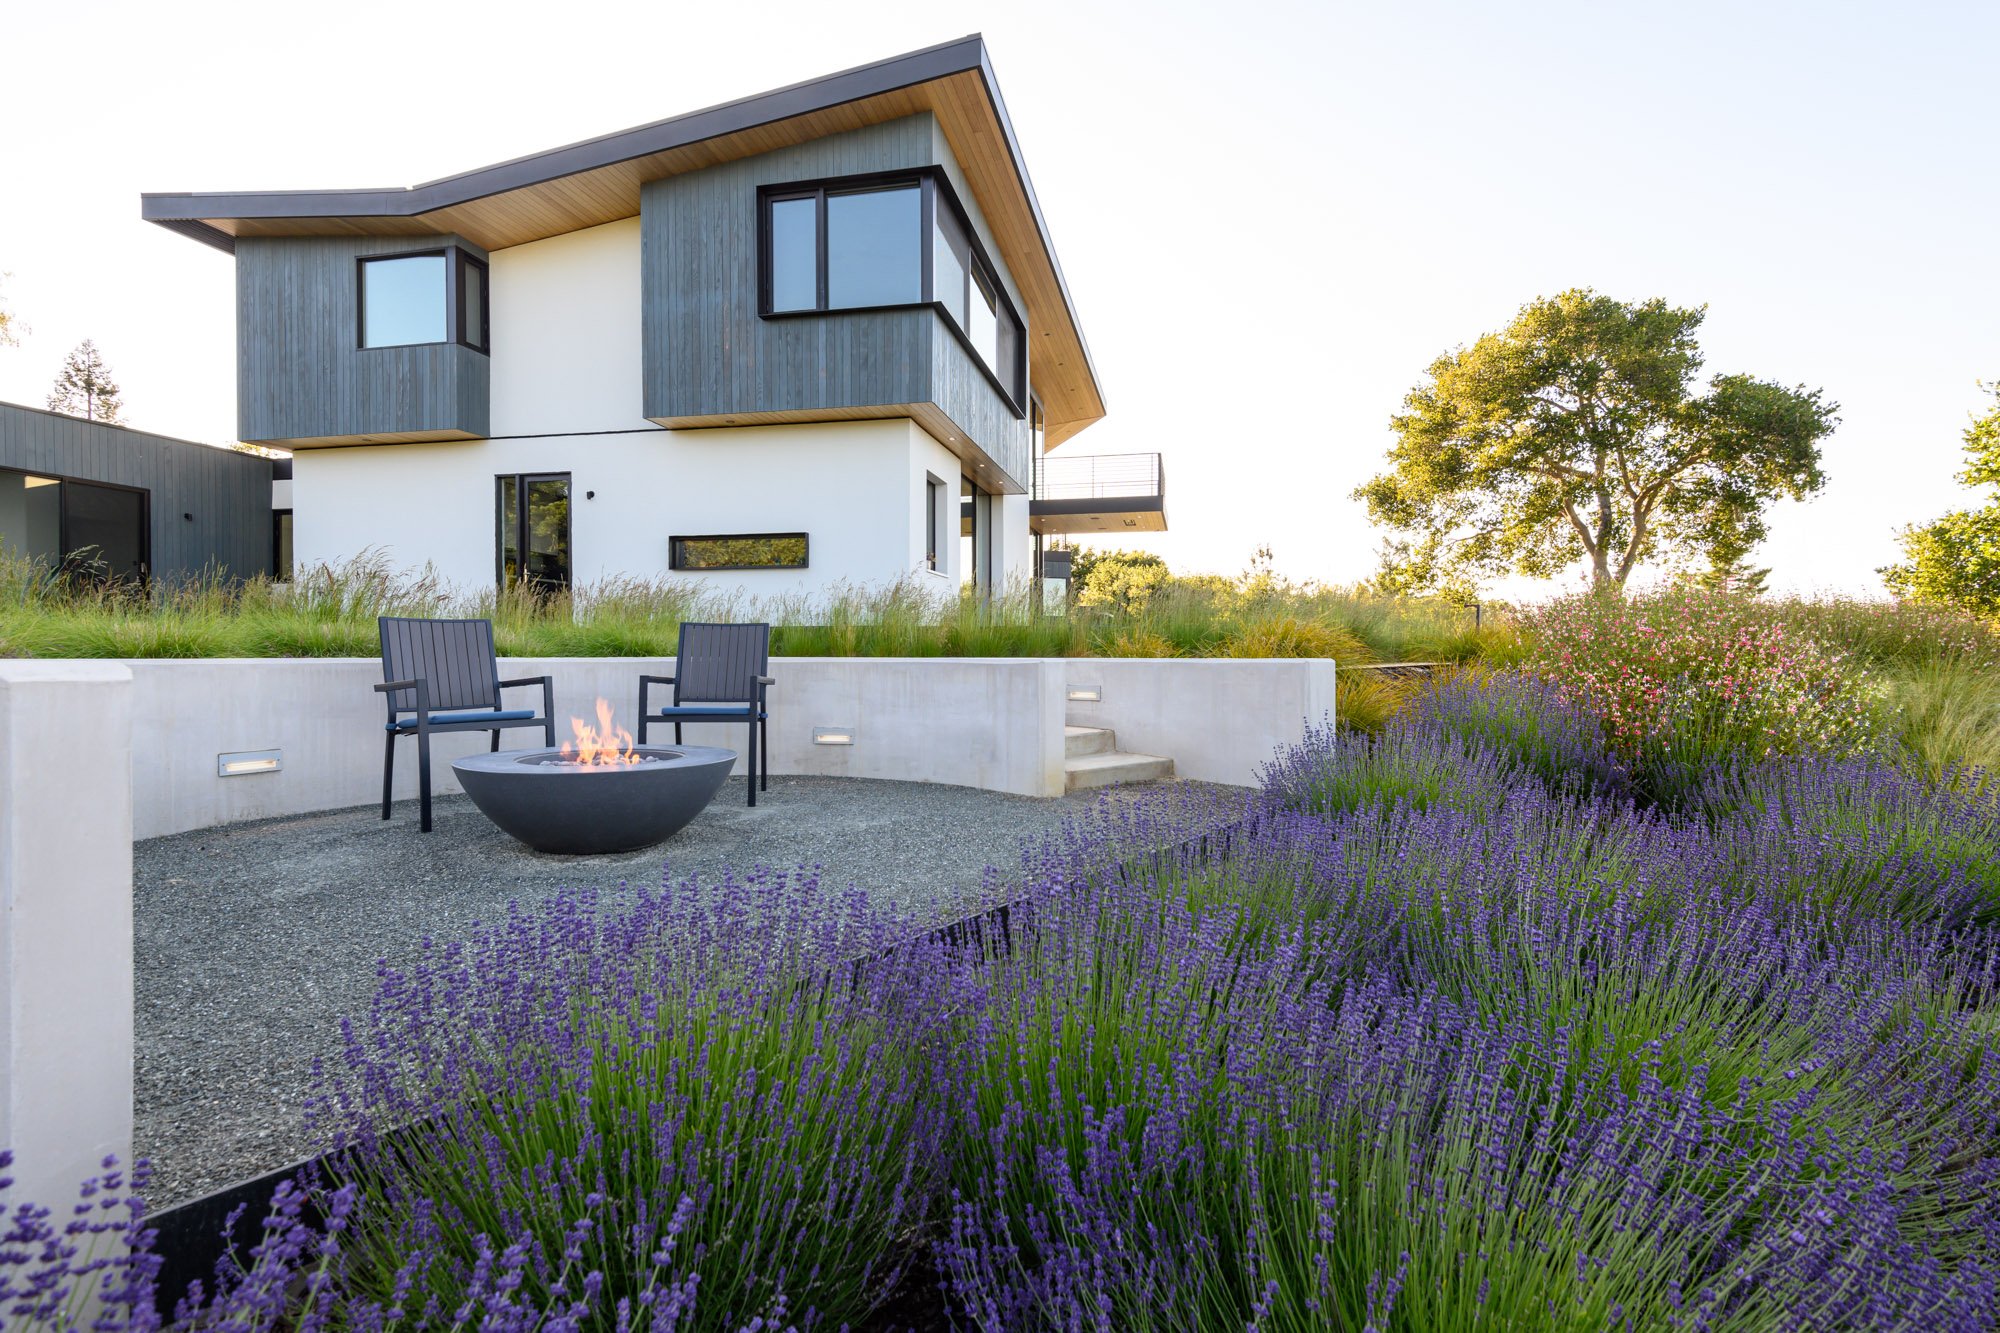  Residence, San Francisco Bay Area BASE Landscape Architecture 